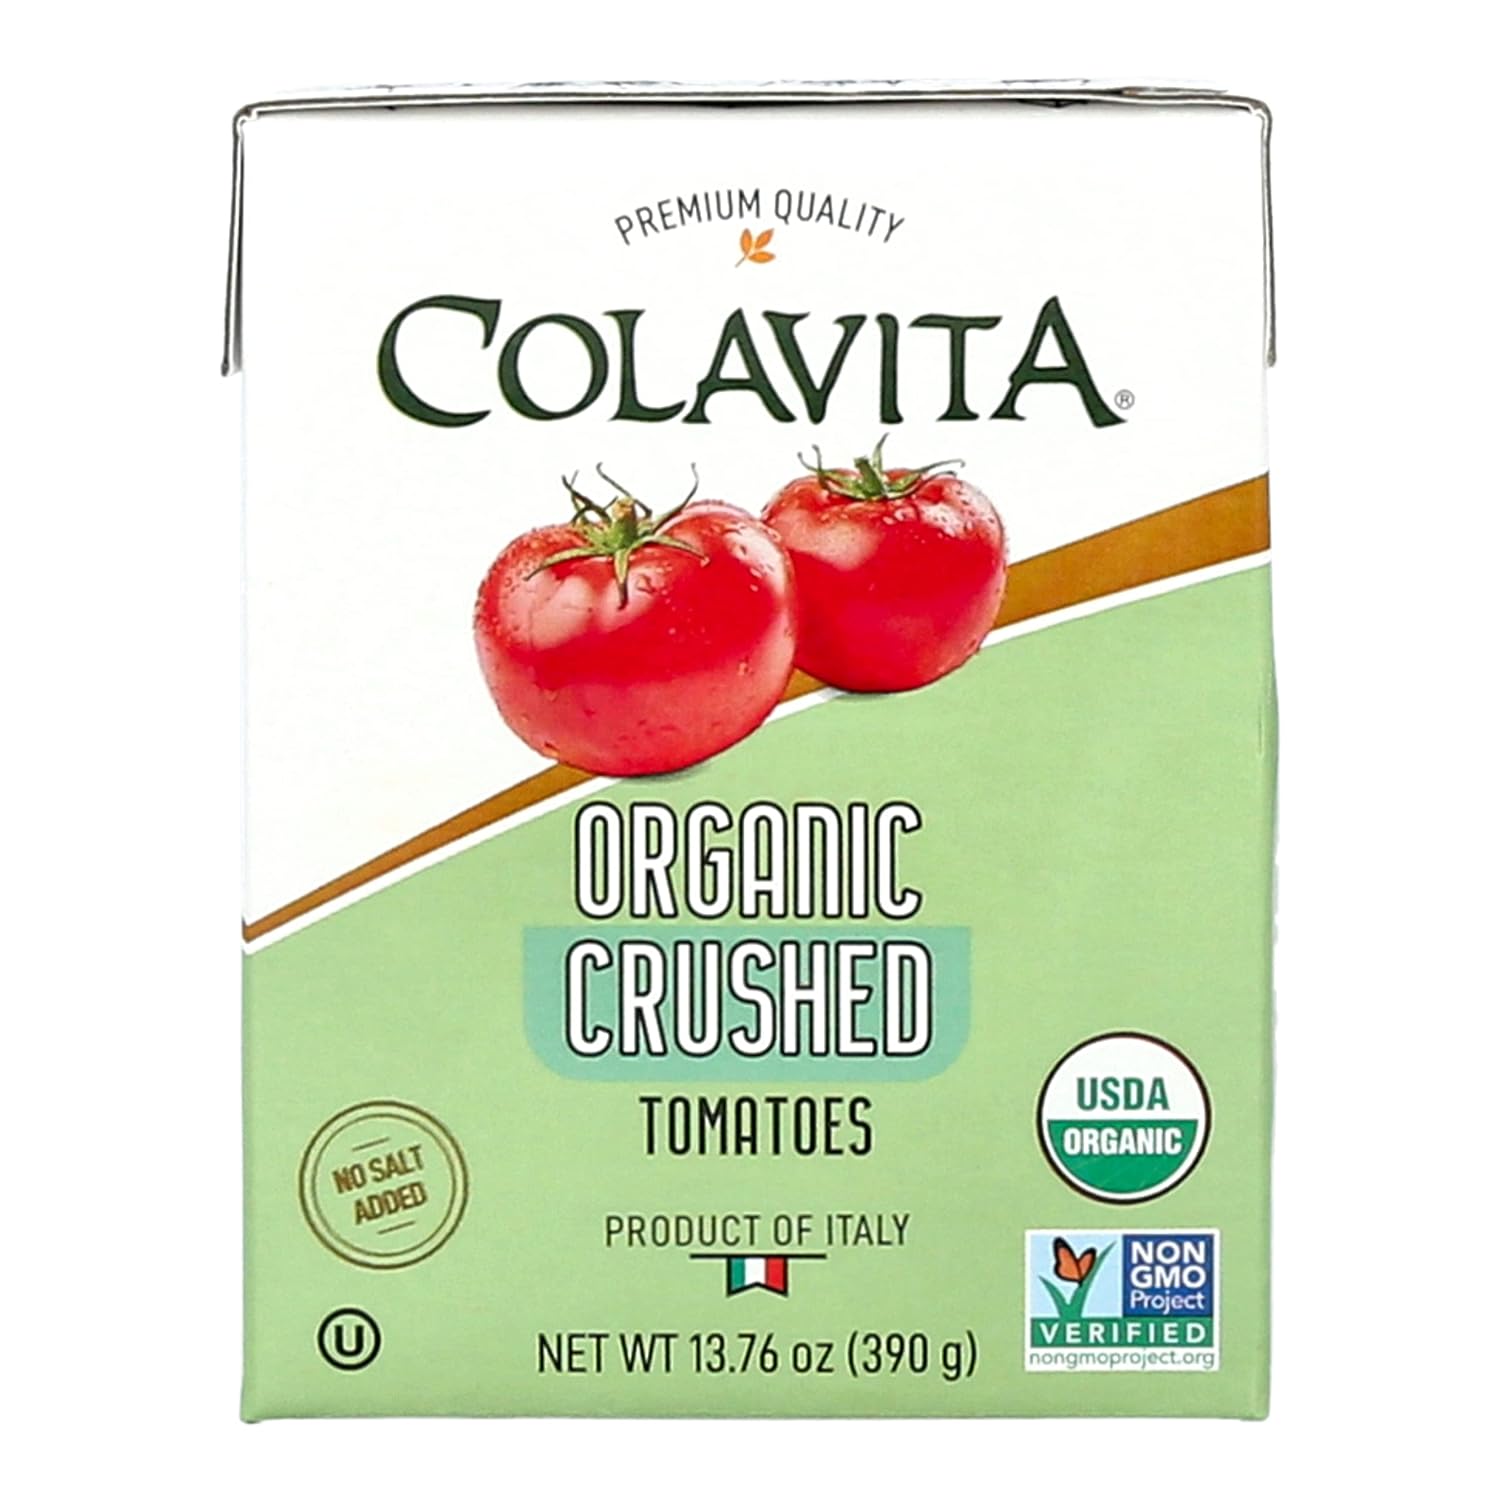 Colavita Recart Tomatoes - Organic Crushed, 13.76oz Recart